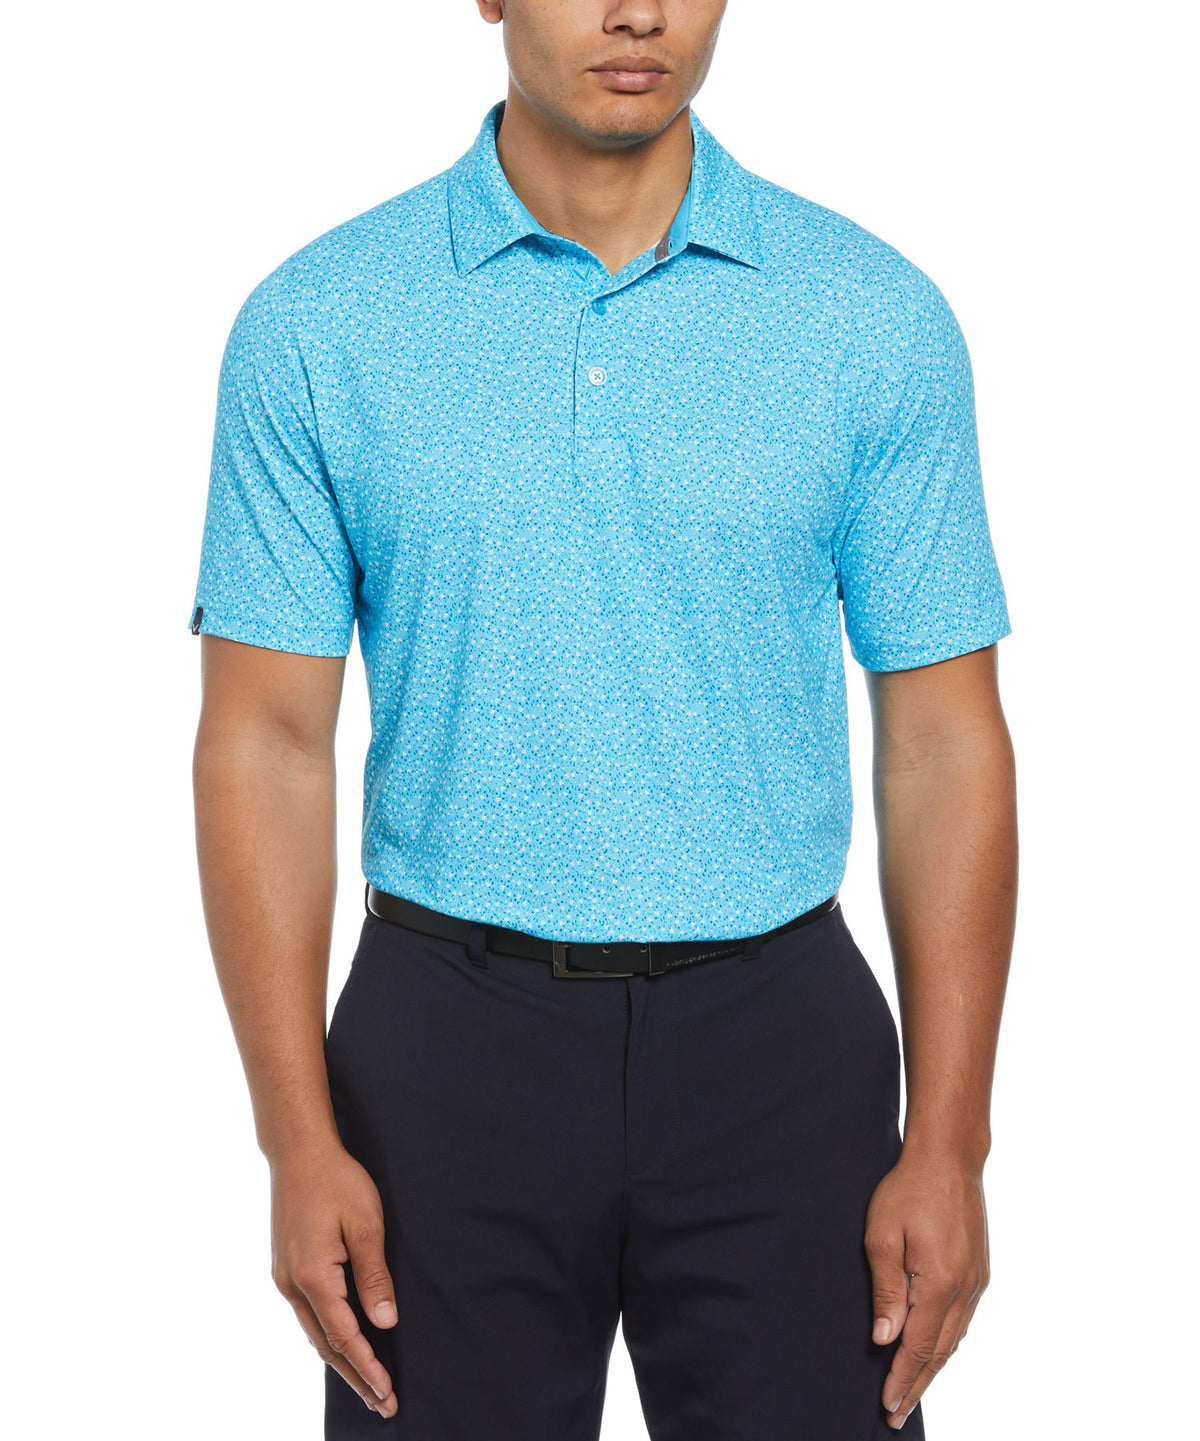 Callaway Short Sleeve Floral Print Polo Knit Shirt, Men's Big & Tall